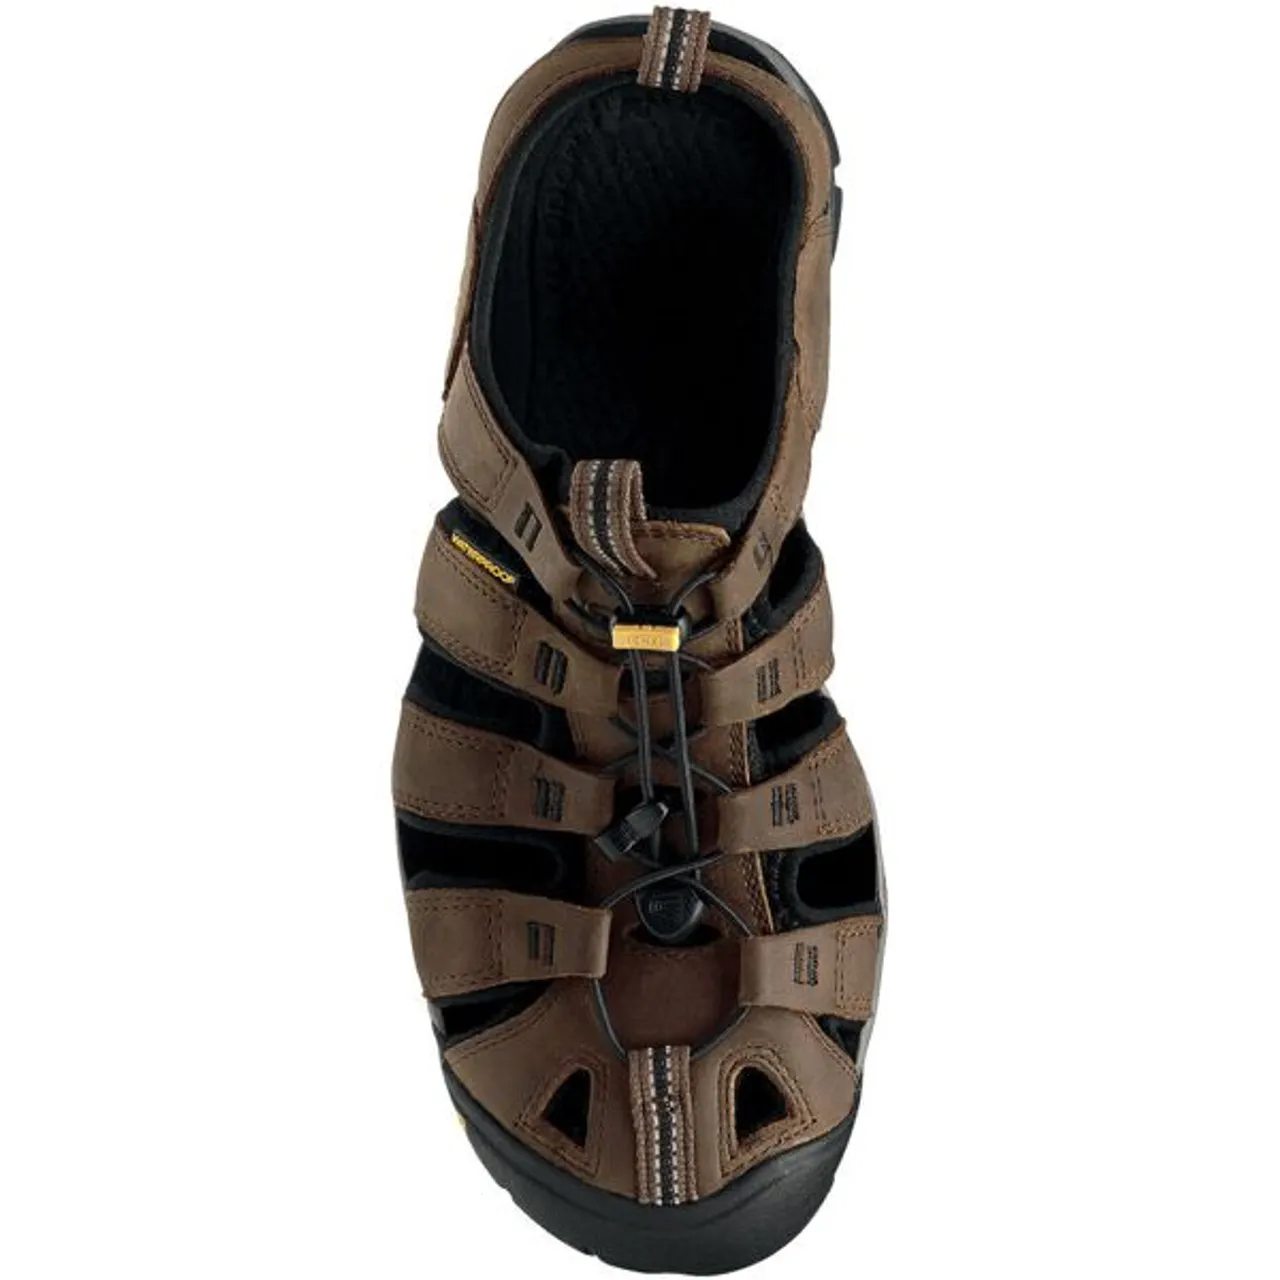 Sandale KEEN "CLEARWATER CNX LEATHER" Gr. 44, braun (dark earth, black) Schuhe Sandalen